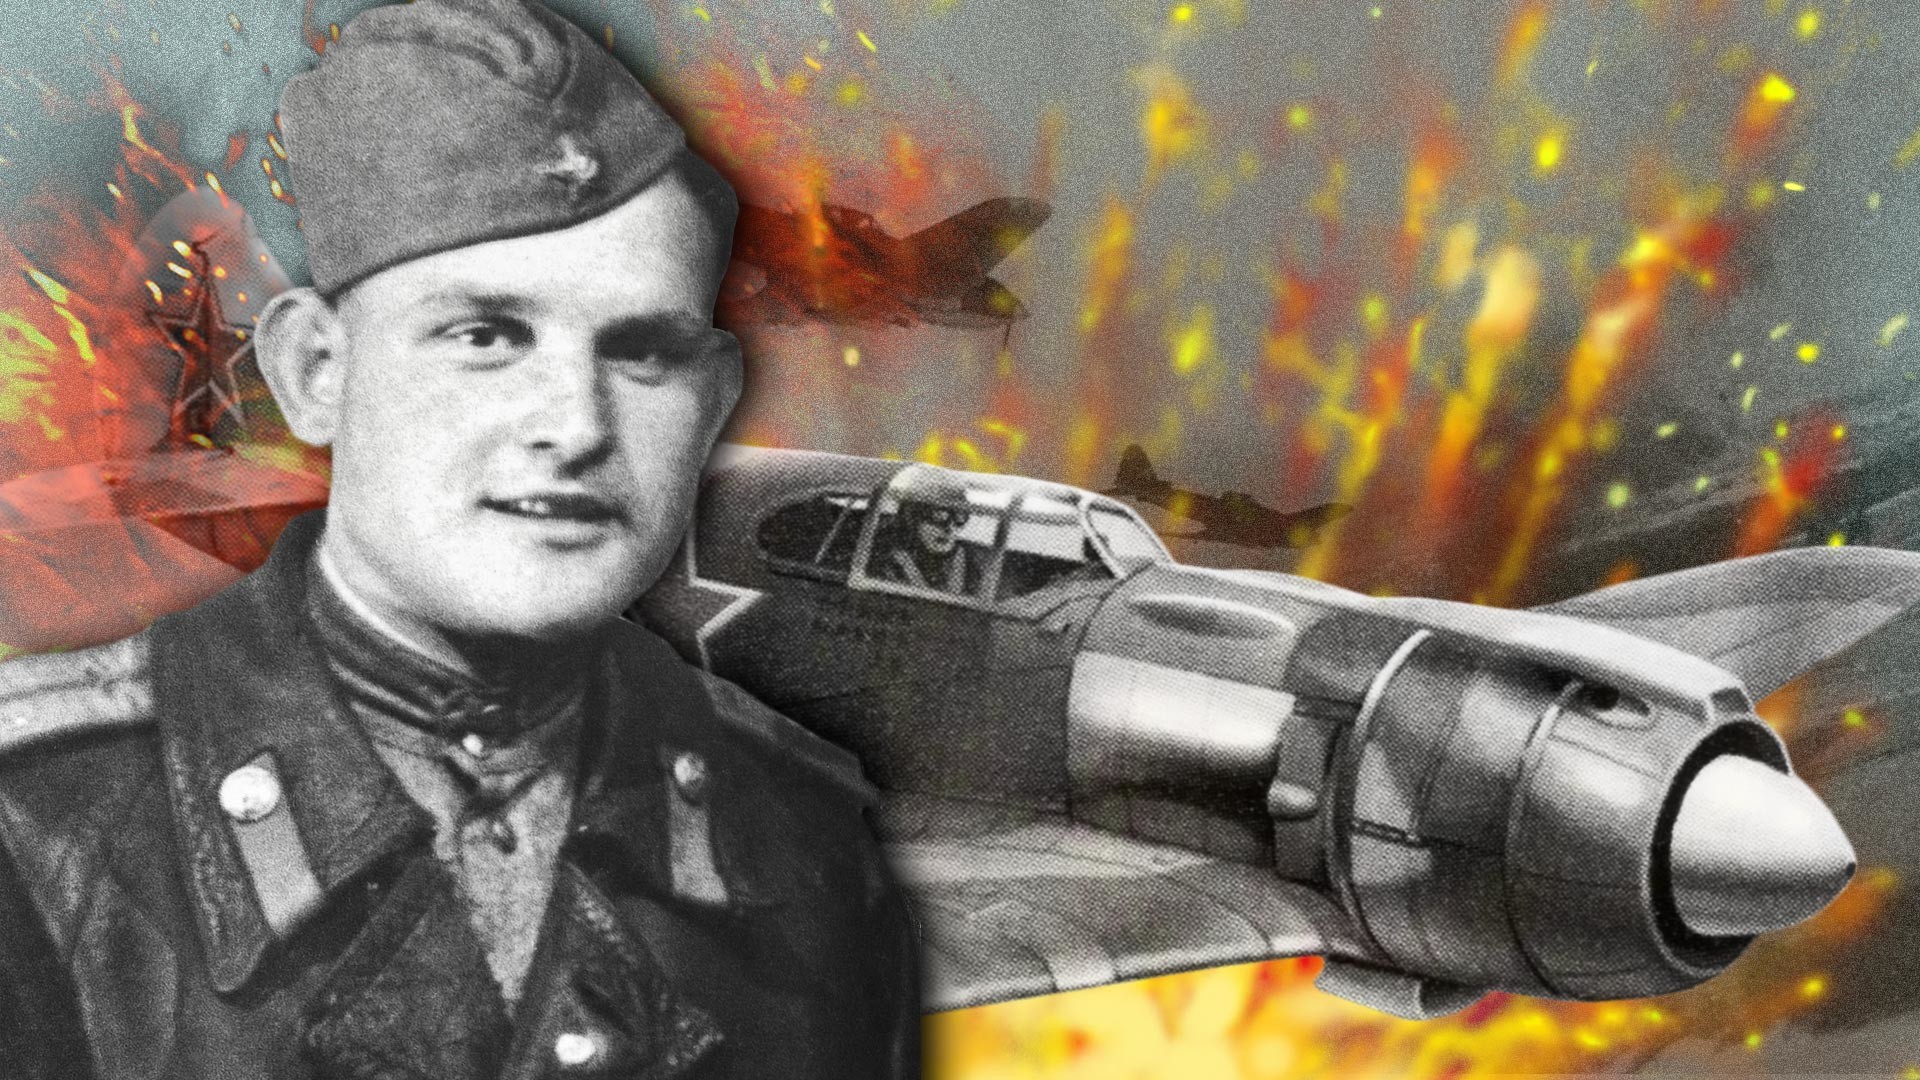 Летчик бомбардировщик герой советского союза хрюкин